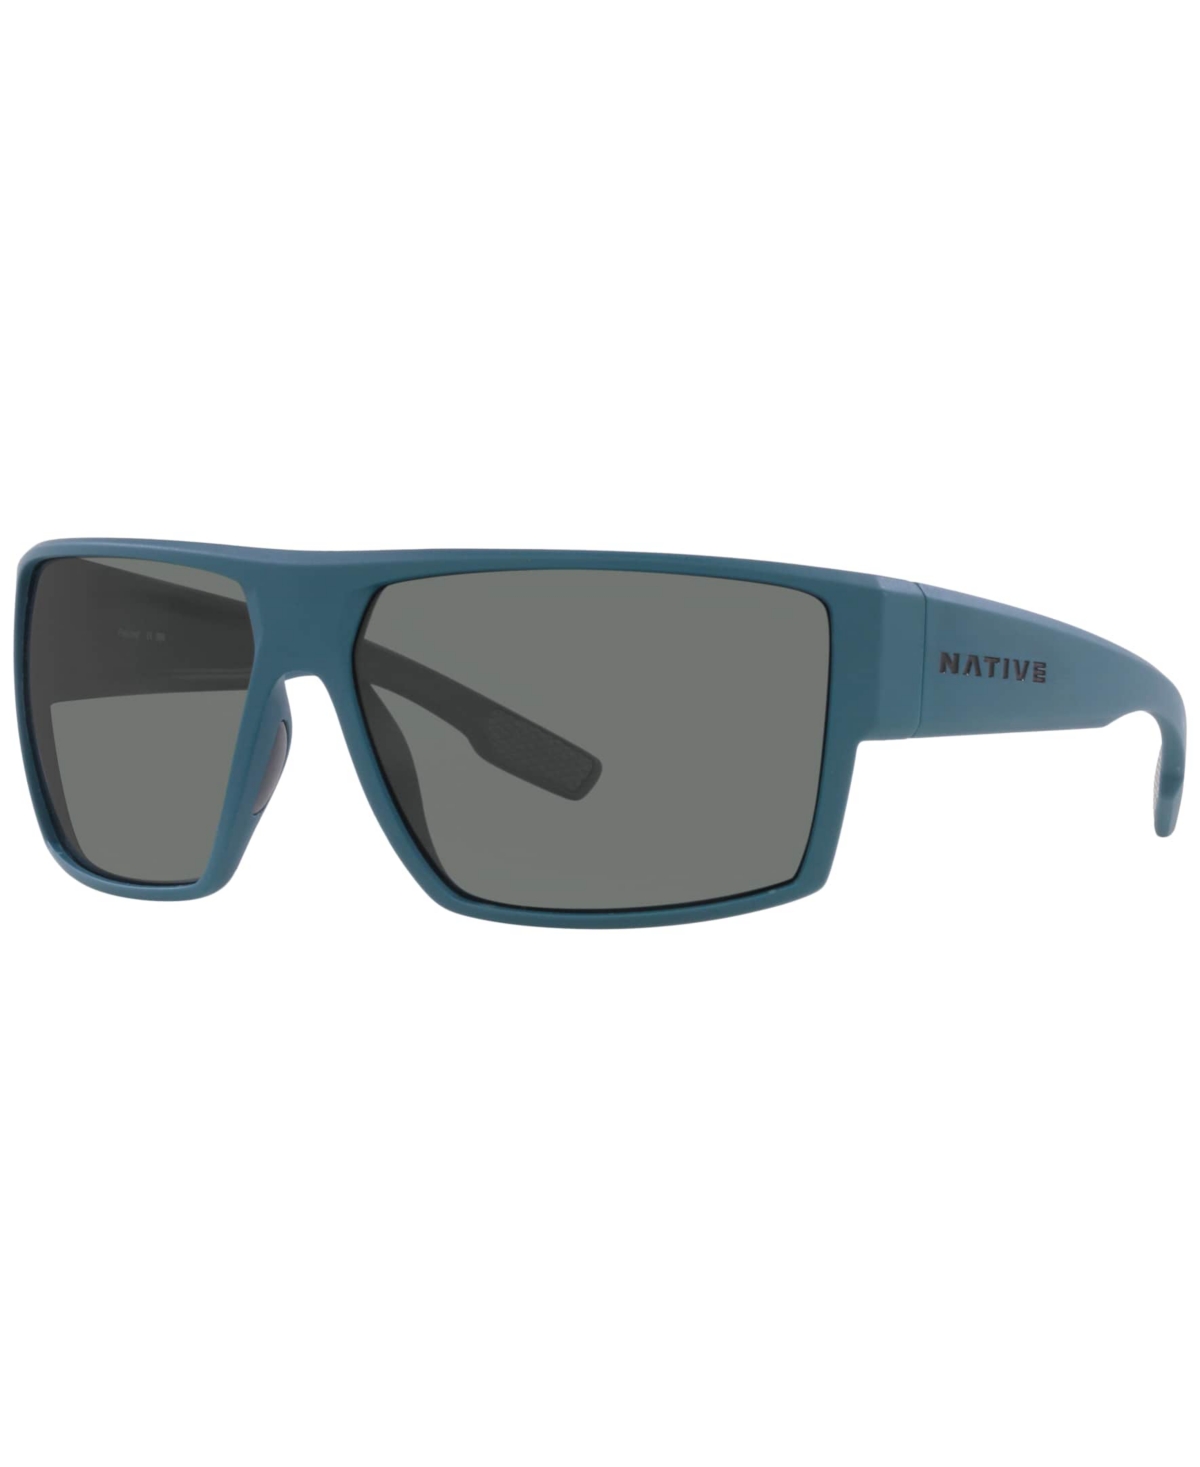 Native Eyewear Native Men's Polarized Sunglasses, Xd9013 In Blue Agave,grey